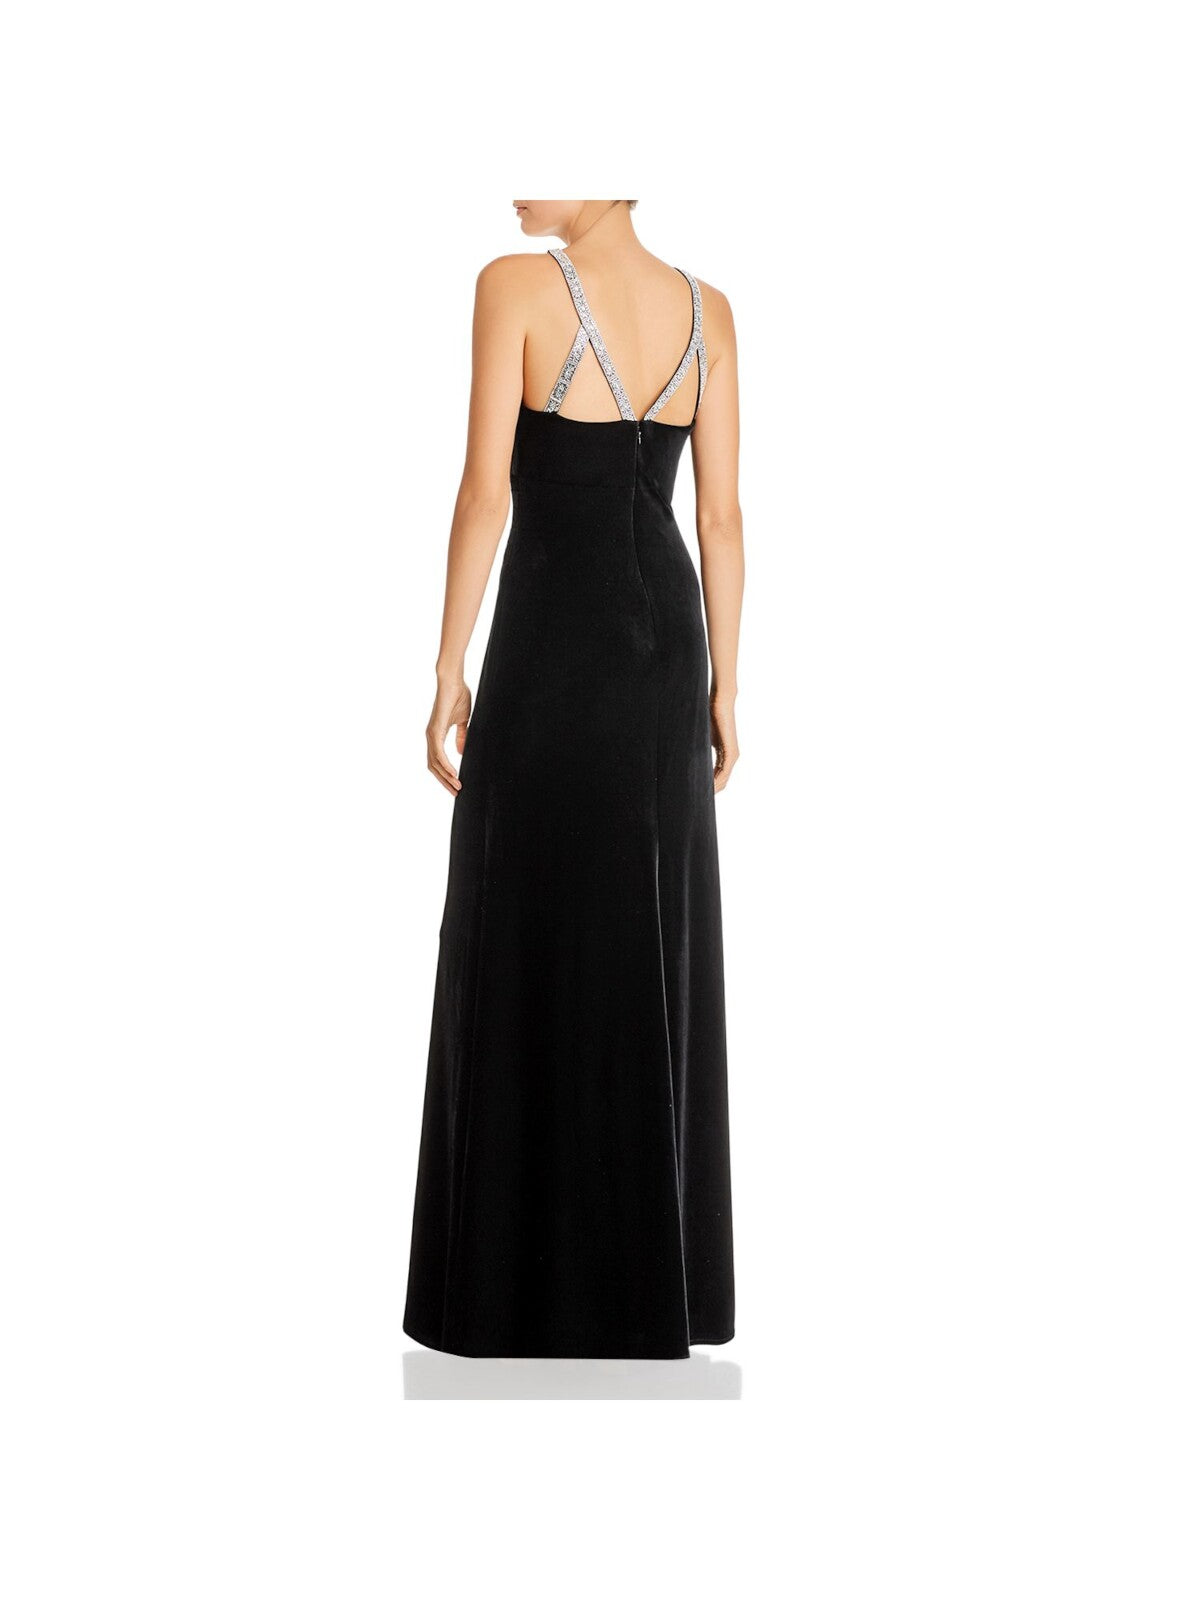 AQUA FORMAL Womens Black Textured Zippered Rhinestone Straps Lined Pleated Sleeveless Jewel Neck Full-Length Evening Gown Dress 6